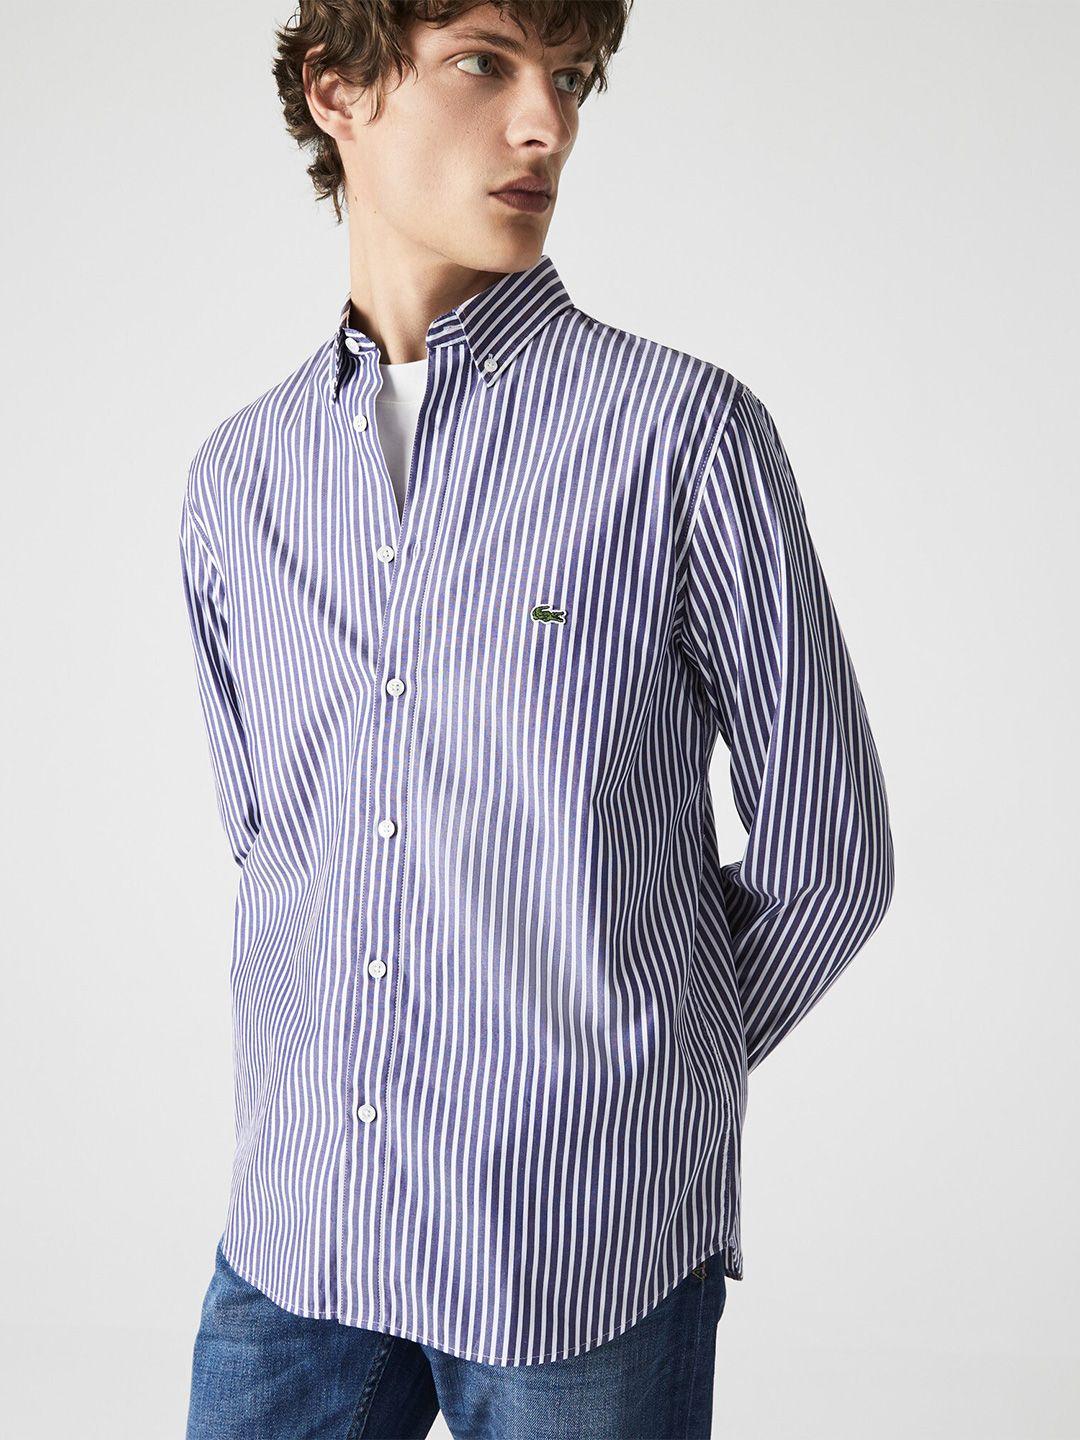 lacoste-men-modern-striped-pure-cotton-casual-shirt